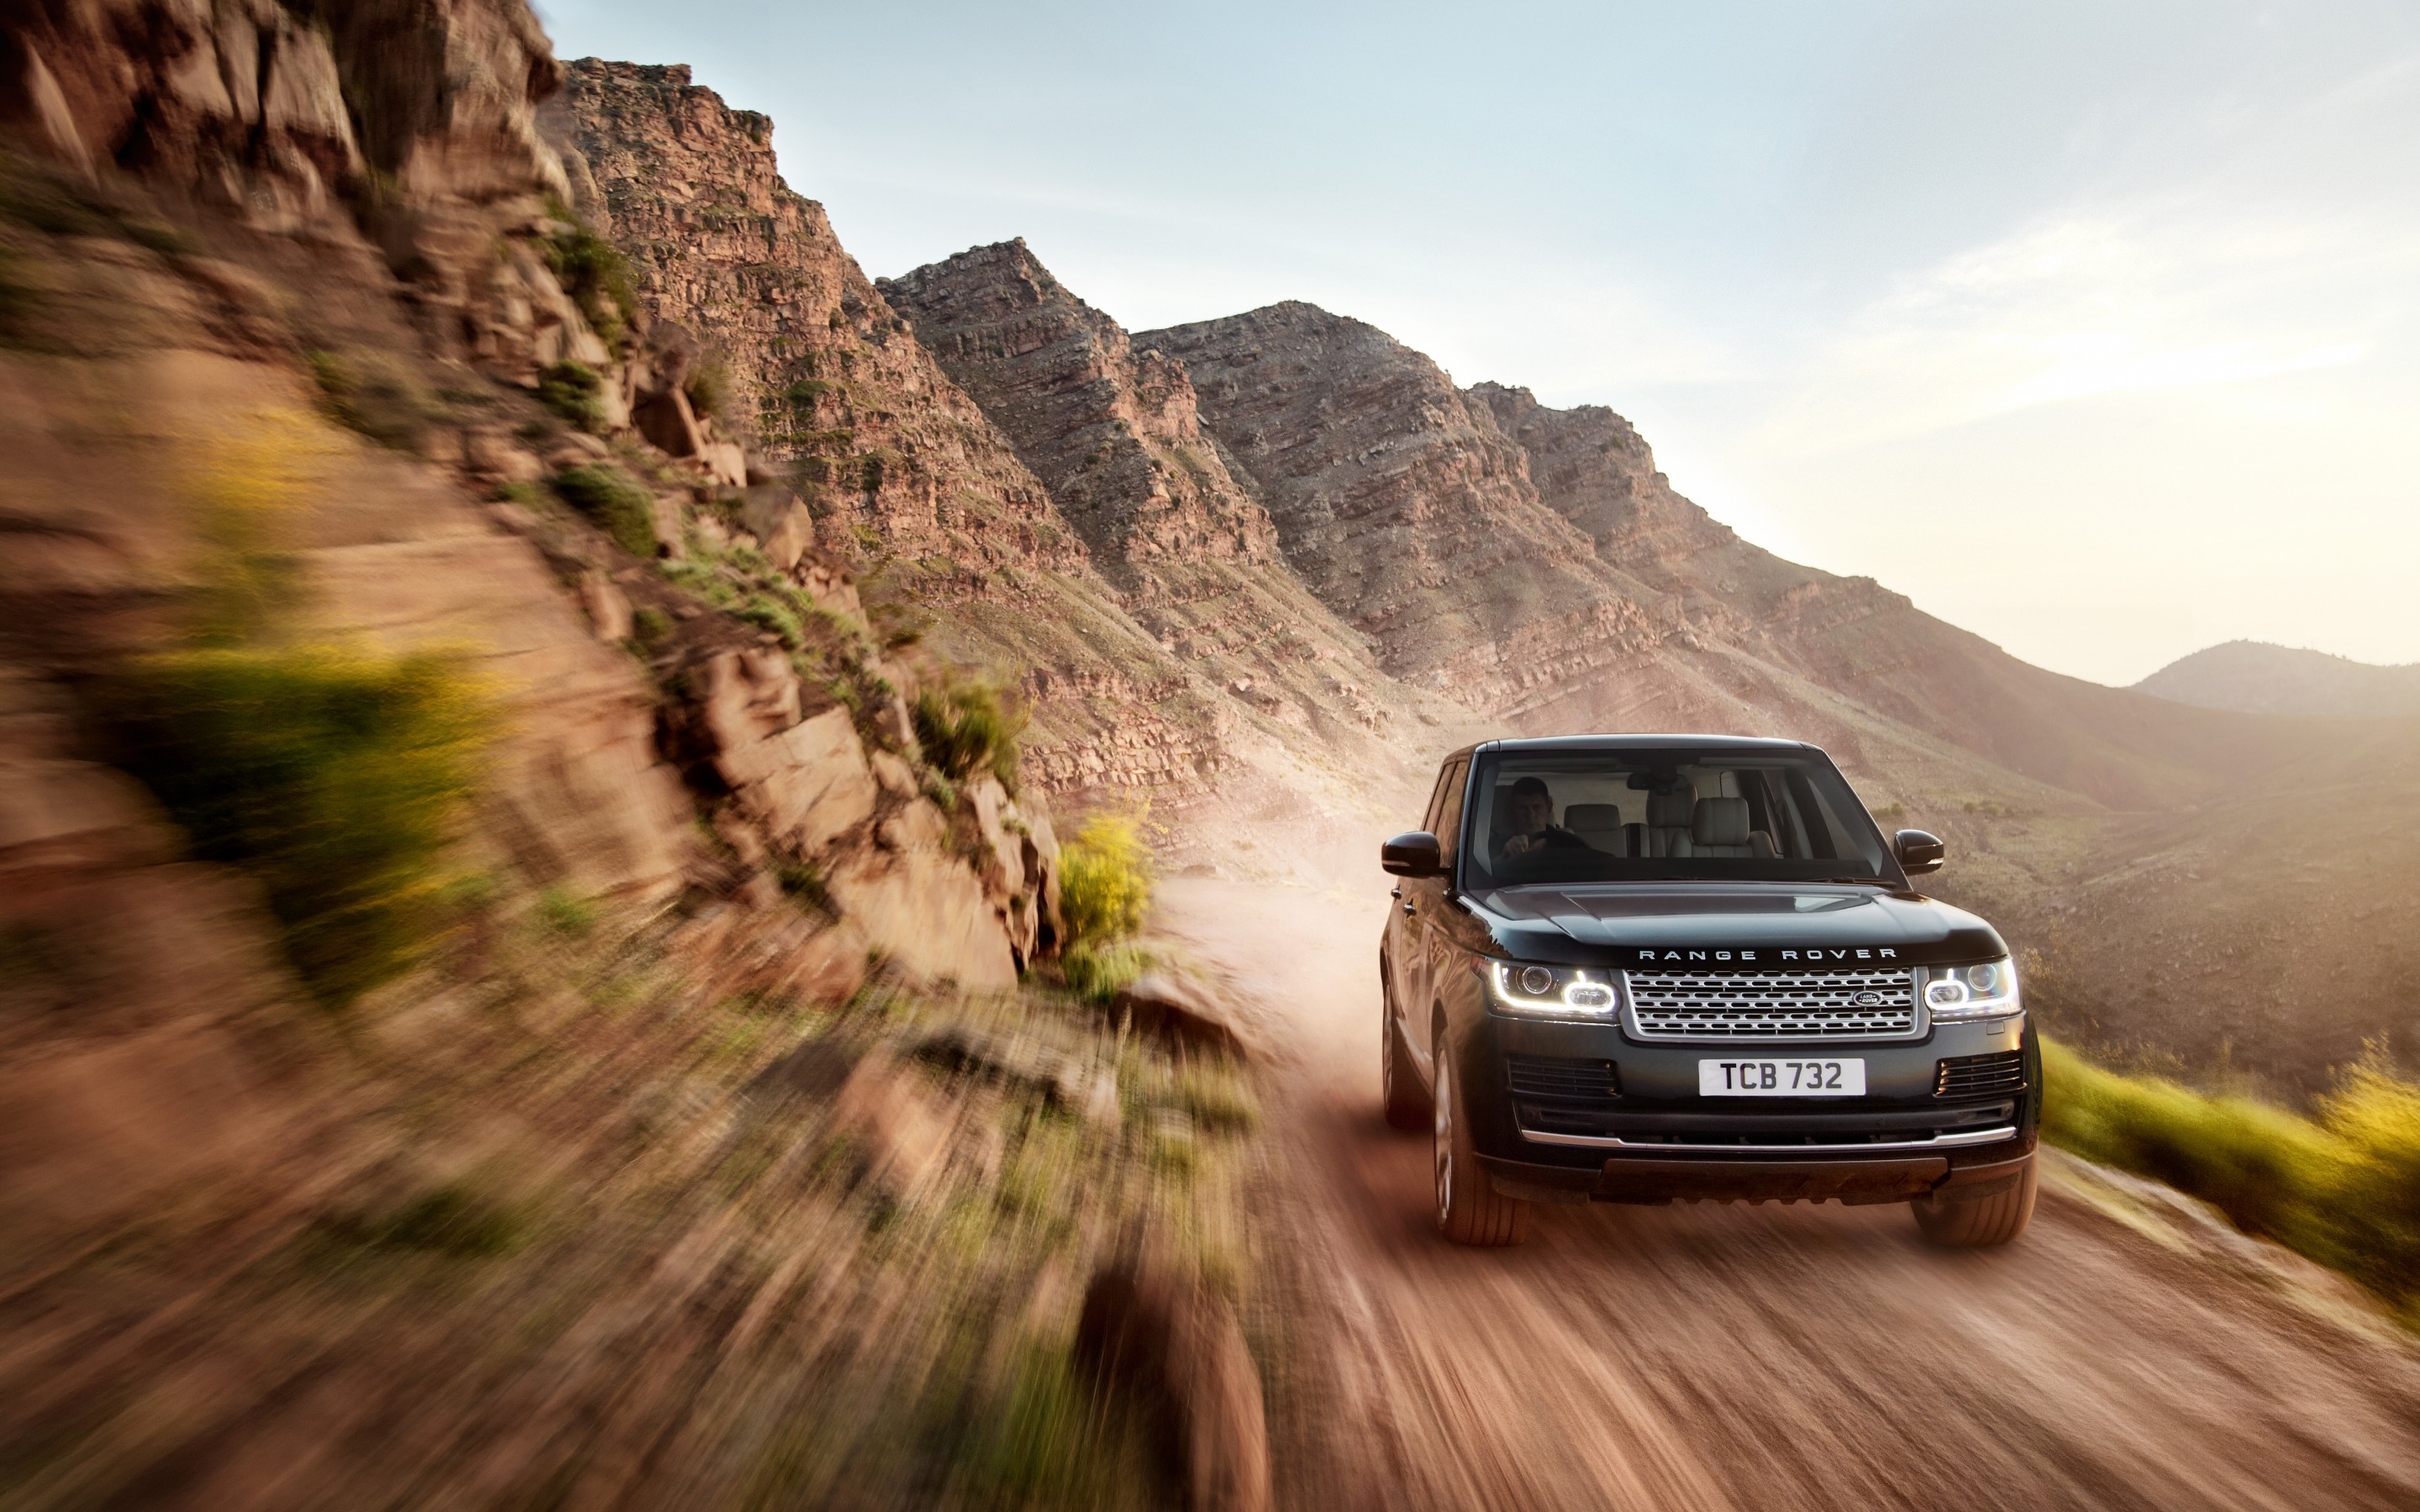 New Black Range Rover on Speed for 2880 x 1800 Retina Display resolution